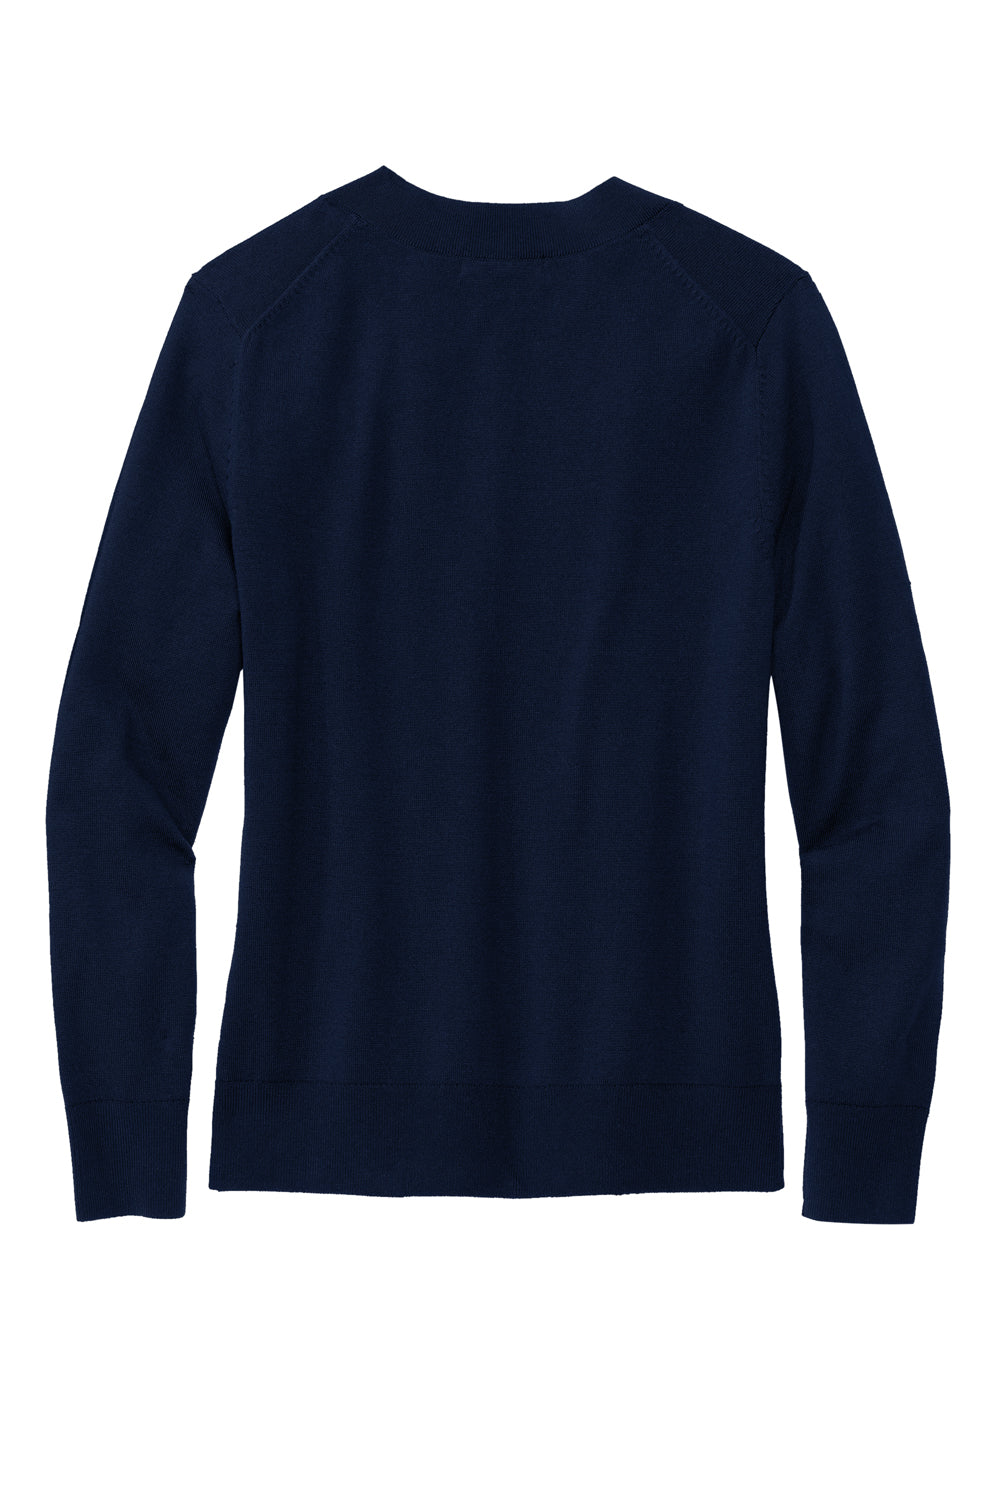 Brooks Brothers Womens Long Sleeve V-Neck Sweater Navy Blue Flat Back